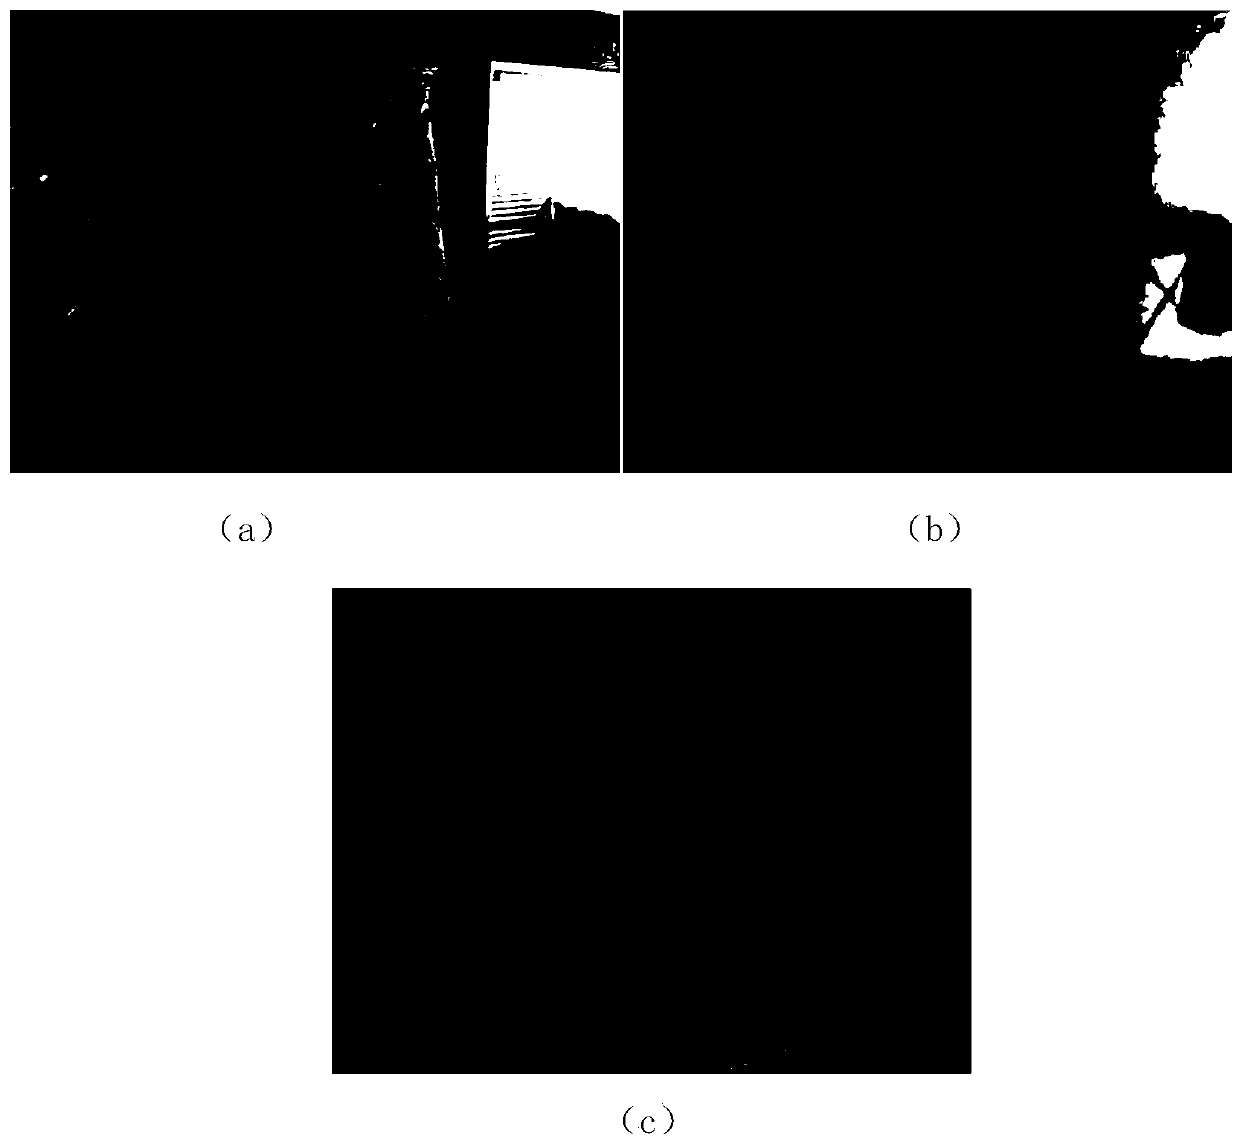 Image segmentation method fusing depth and color information